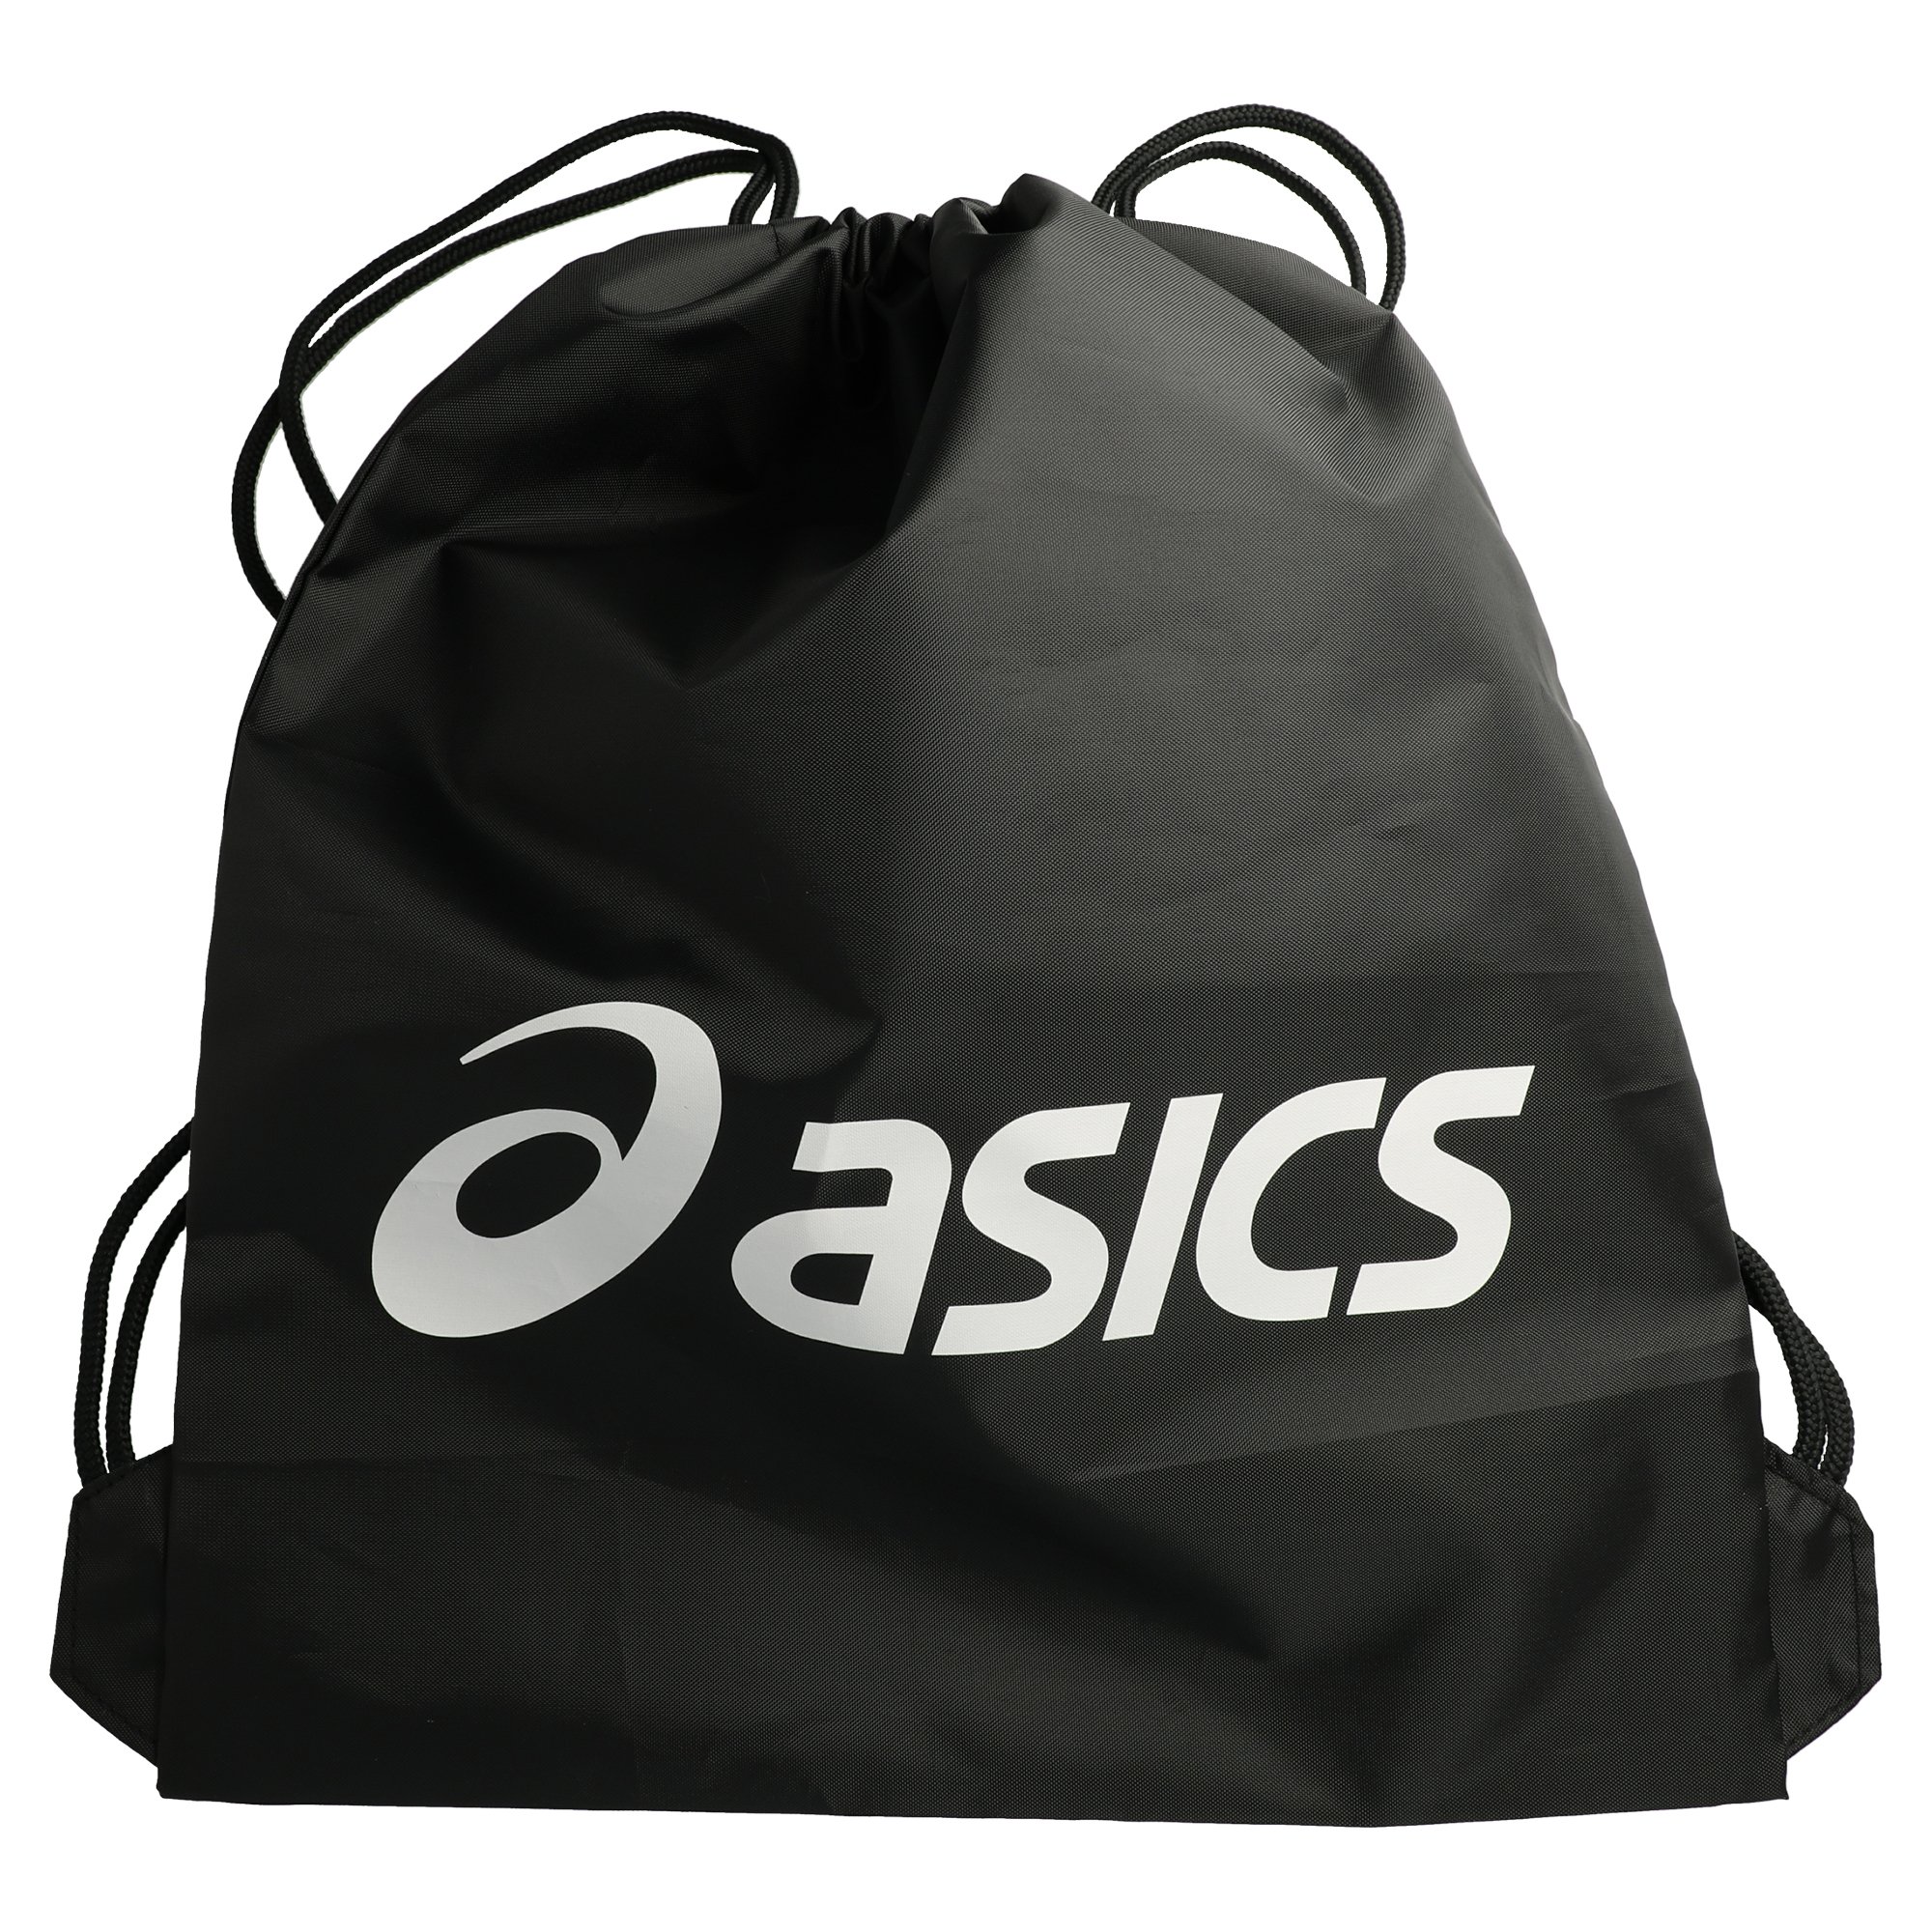 Asics Drawstring Bag